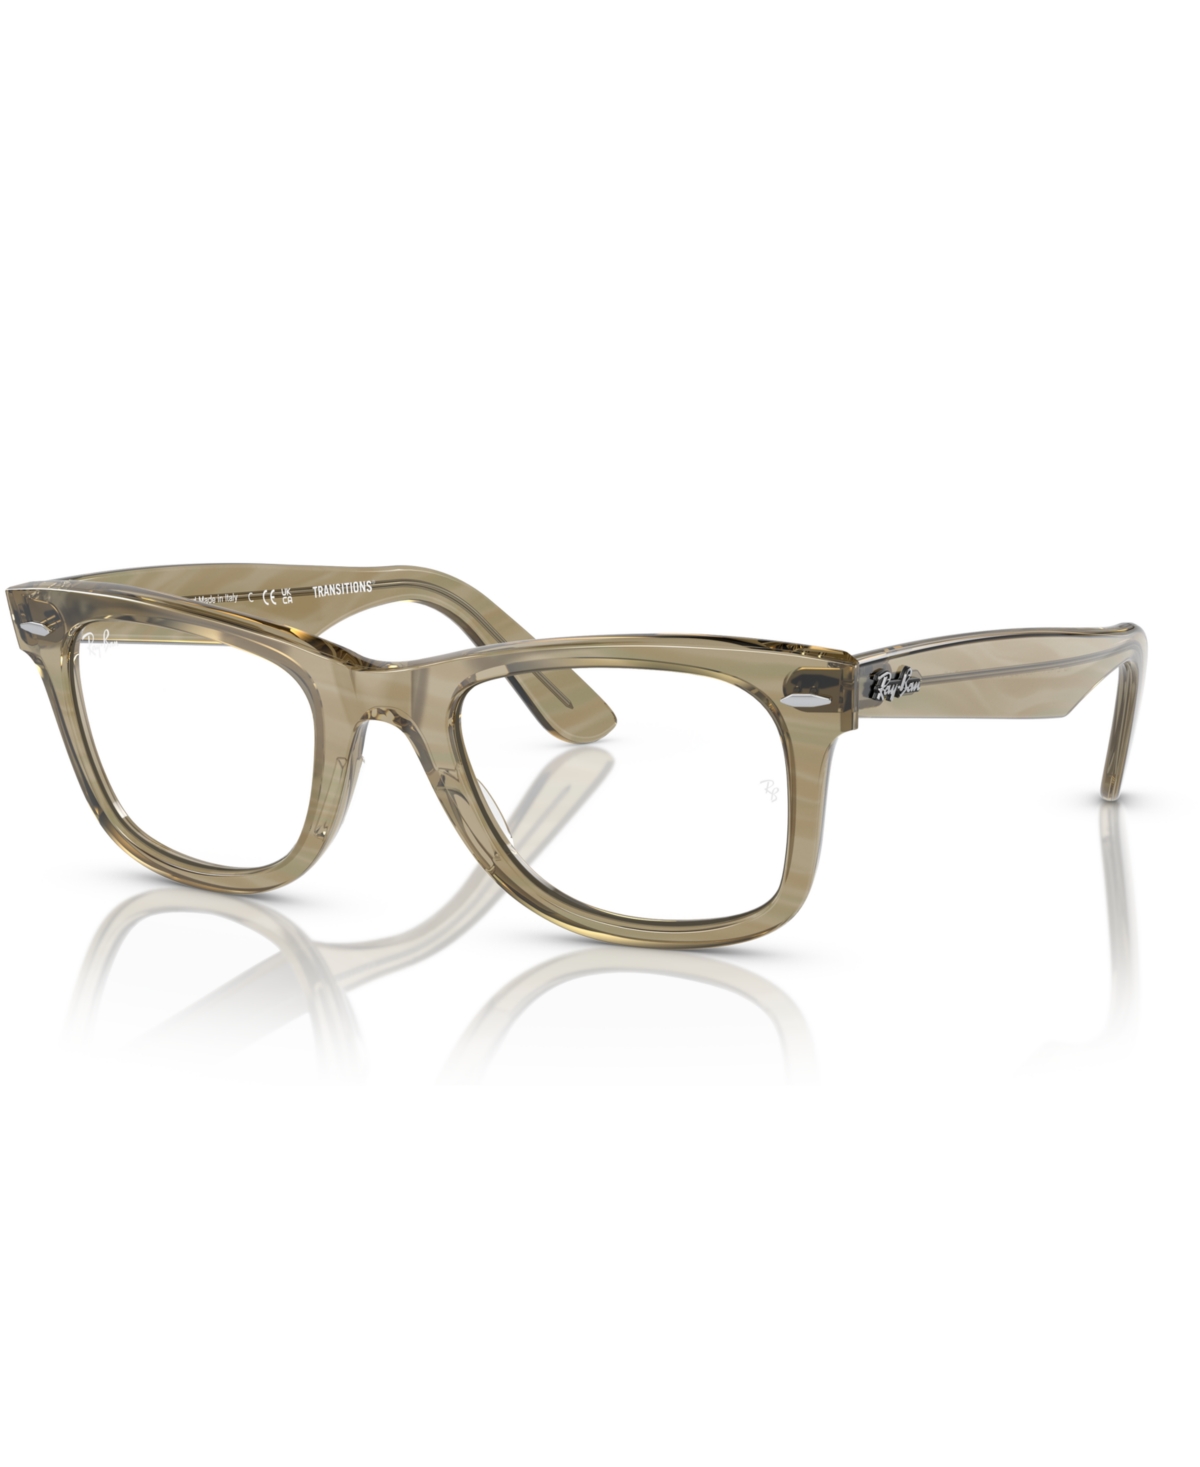 Unisex Sunglasses, Original Wayfarer Change Rb2140F Photochromic - Photo Striped Gray